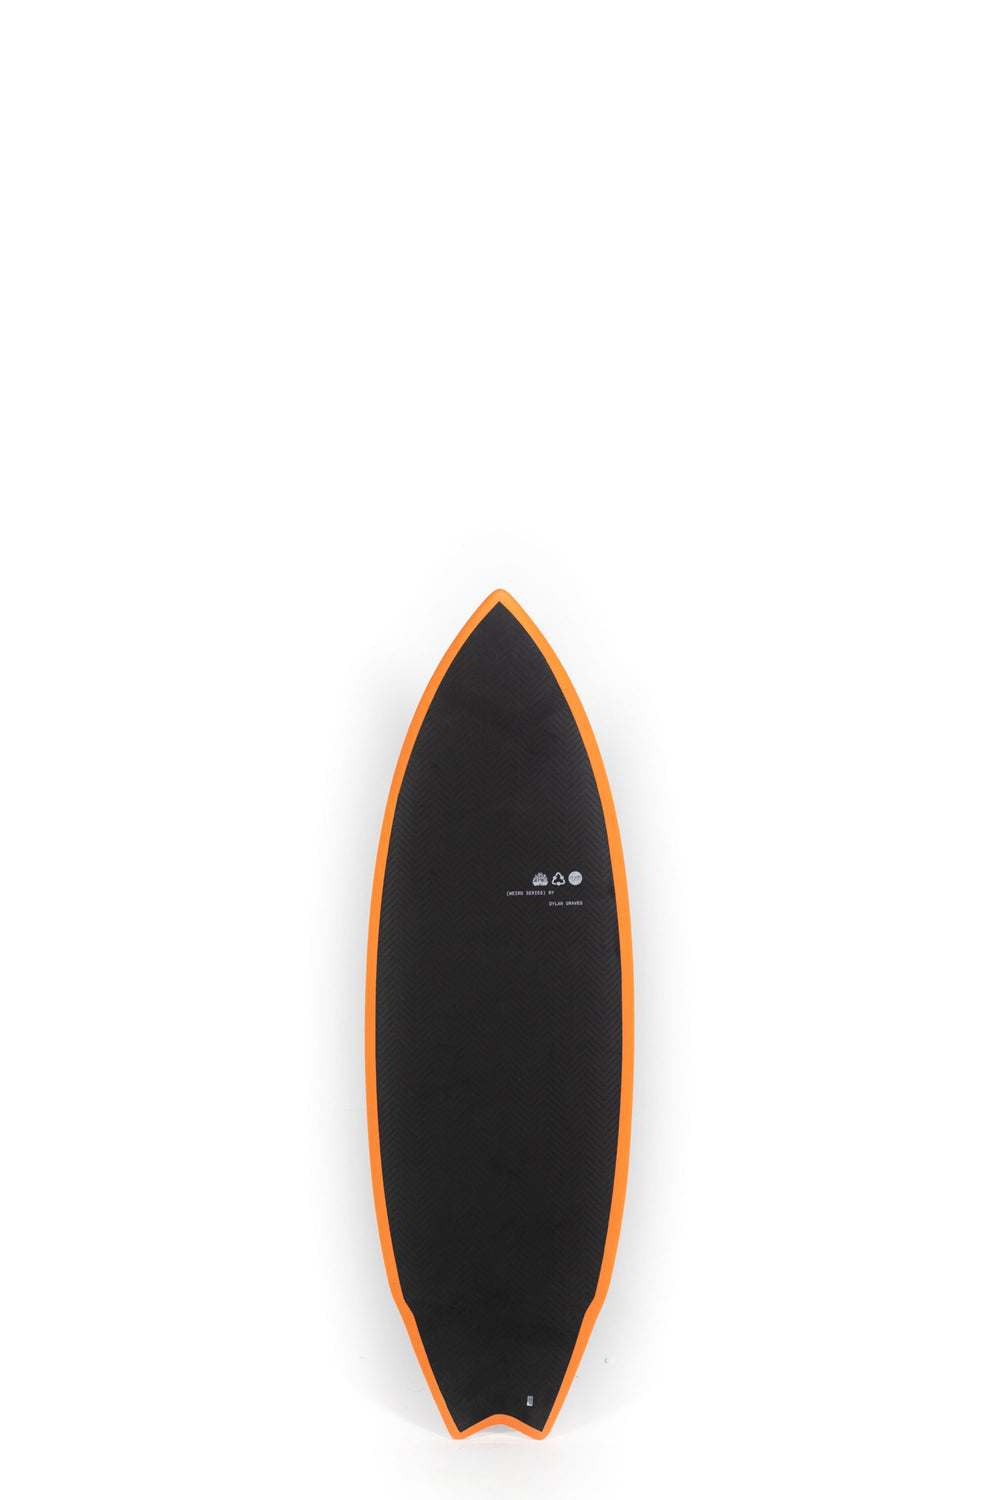 Pukas Surf Shop - HaydenShapes Surfboard - WEIRD WAVES SOFT - 5'4